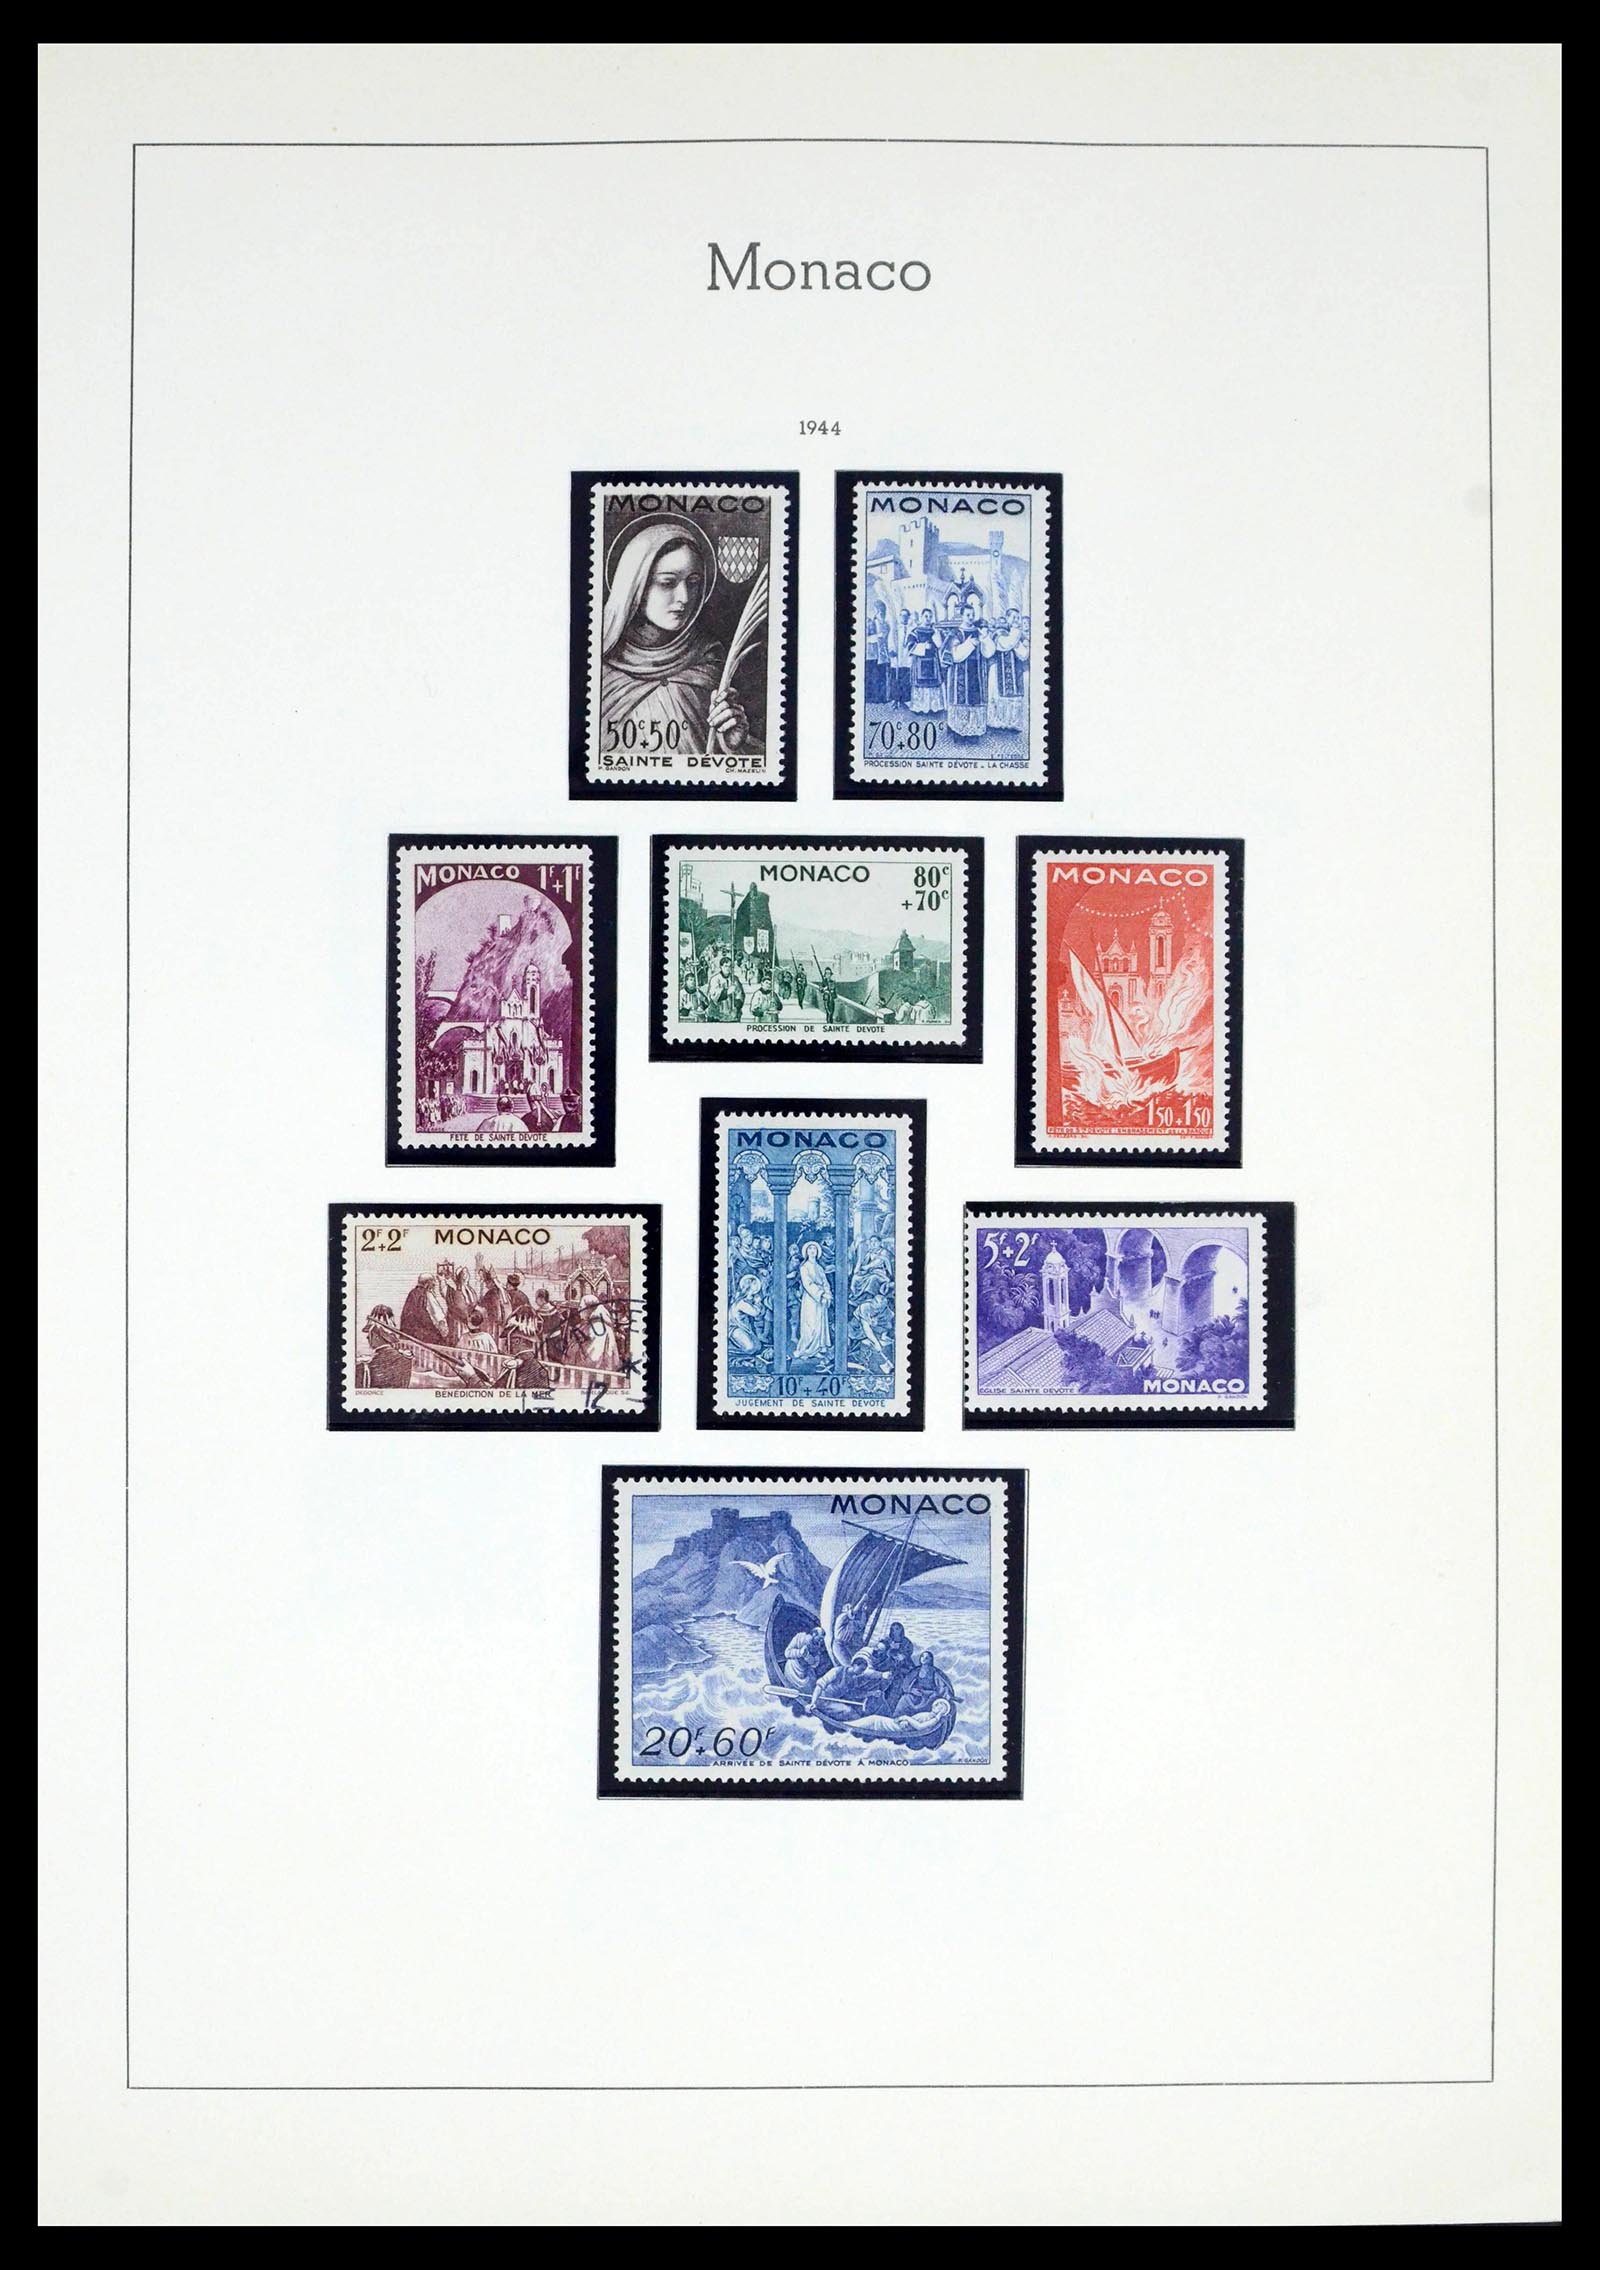 39392 0022 - Stamp collection 39392 Monaco 1885-1999.